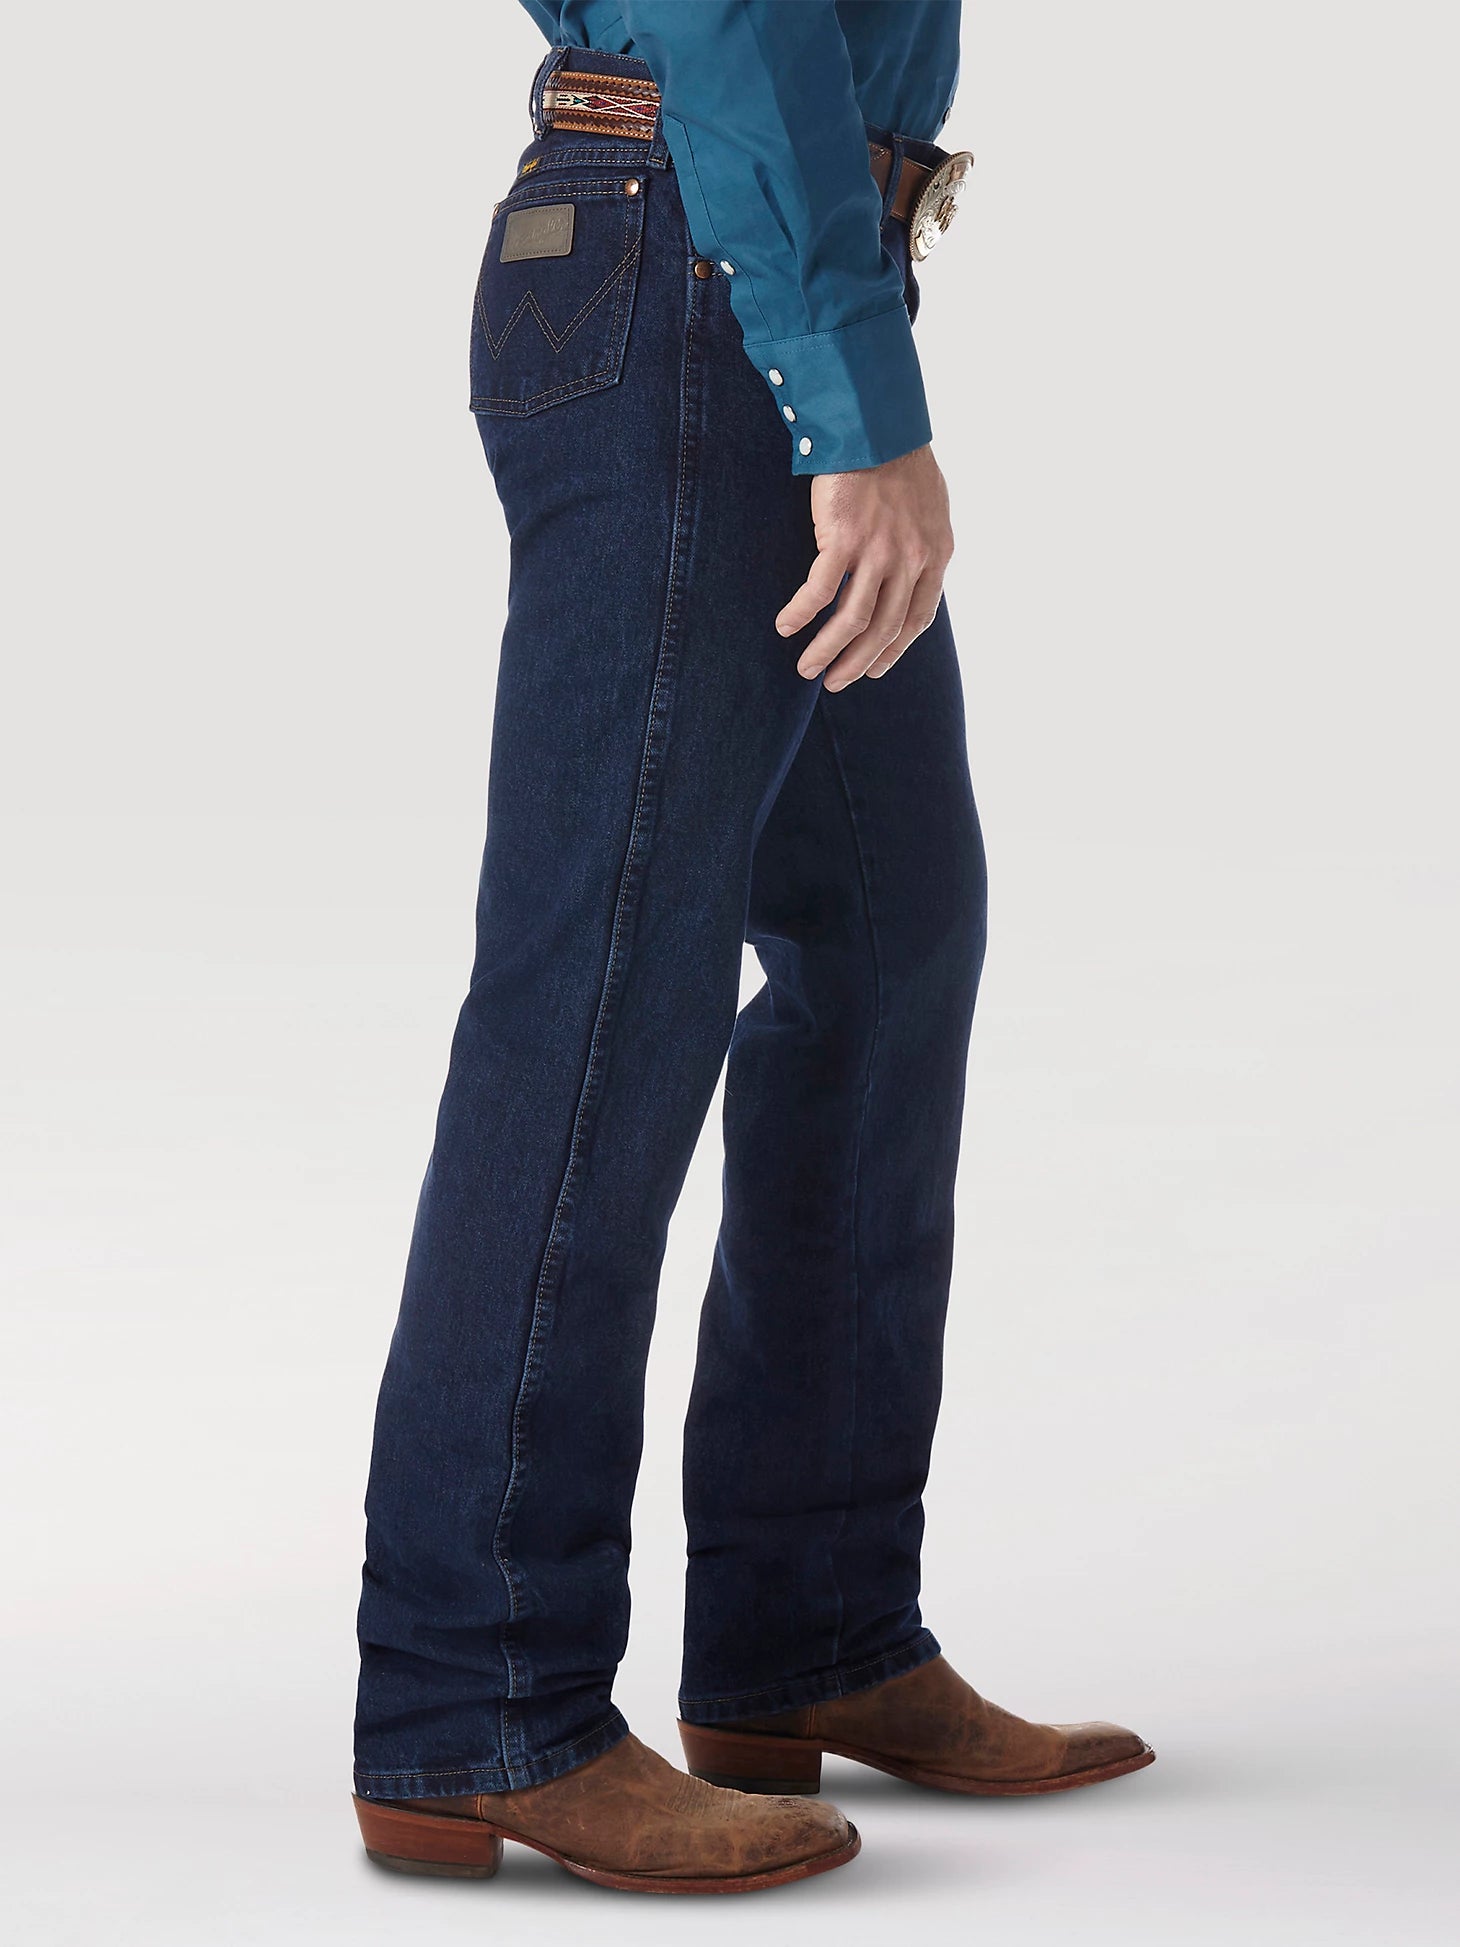 Jeans Wrangler Original Fit Dark Stone Caballero